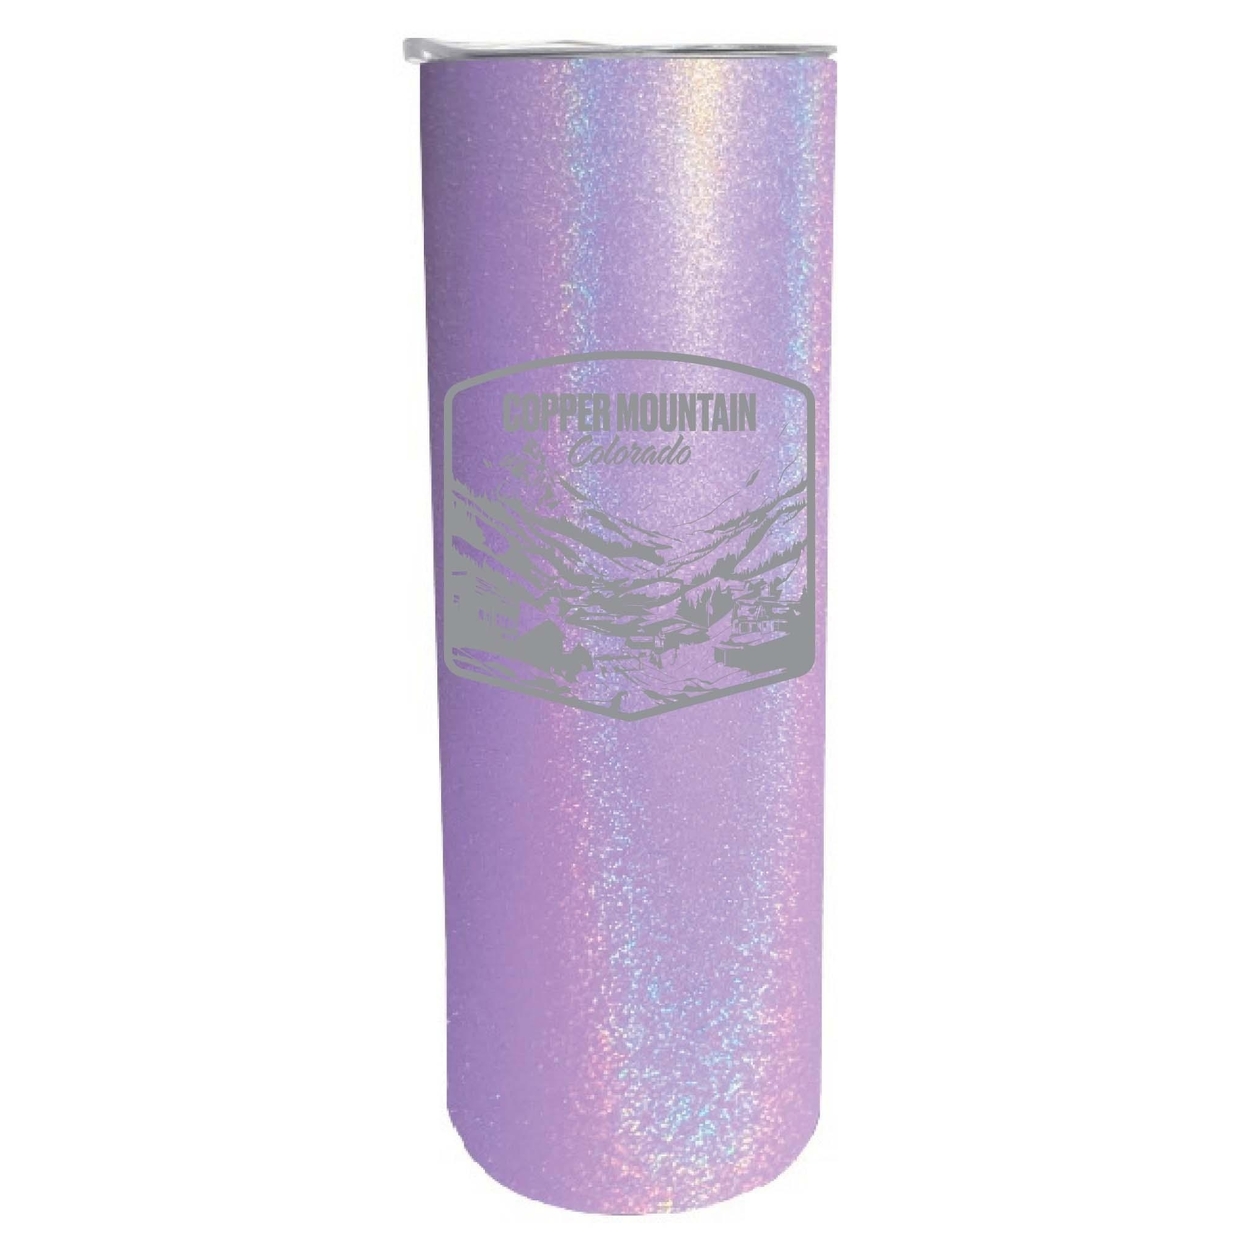 Copper Mountain Souvenir 20 Oz Engraved Insulated Skinny Tumbler - Purple Glitter,,Single Unit